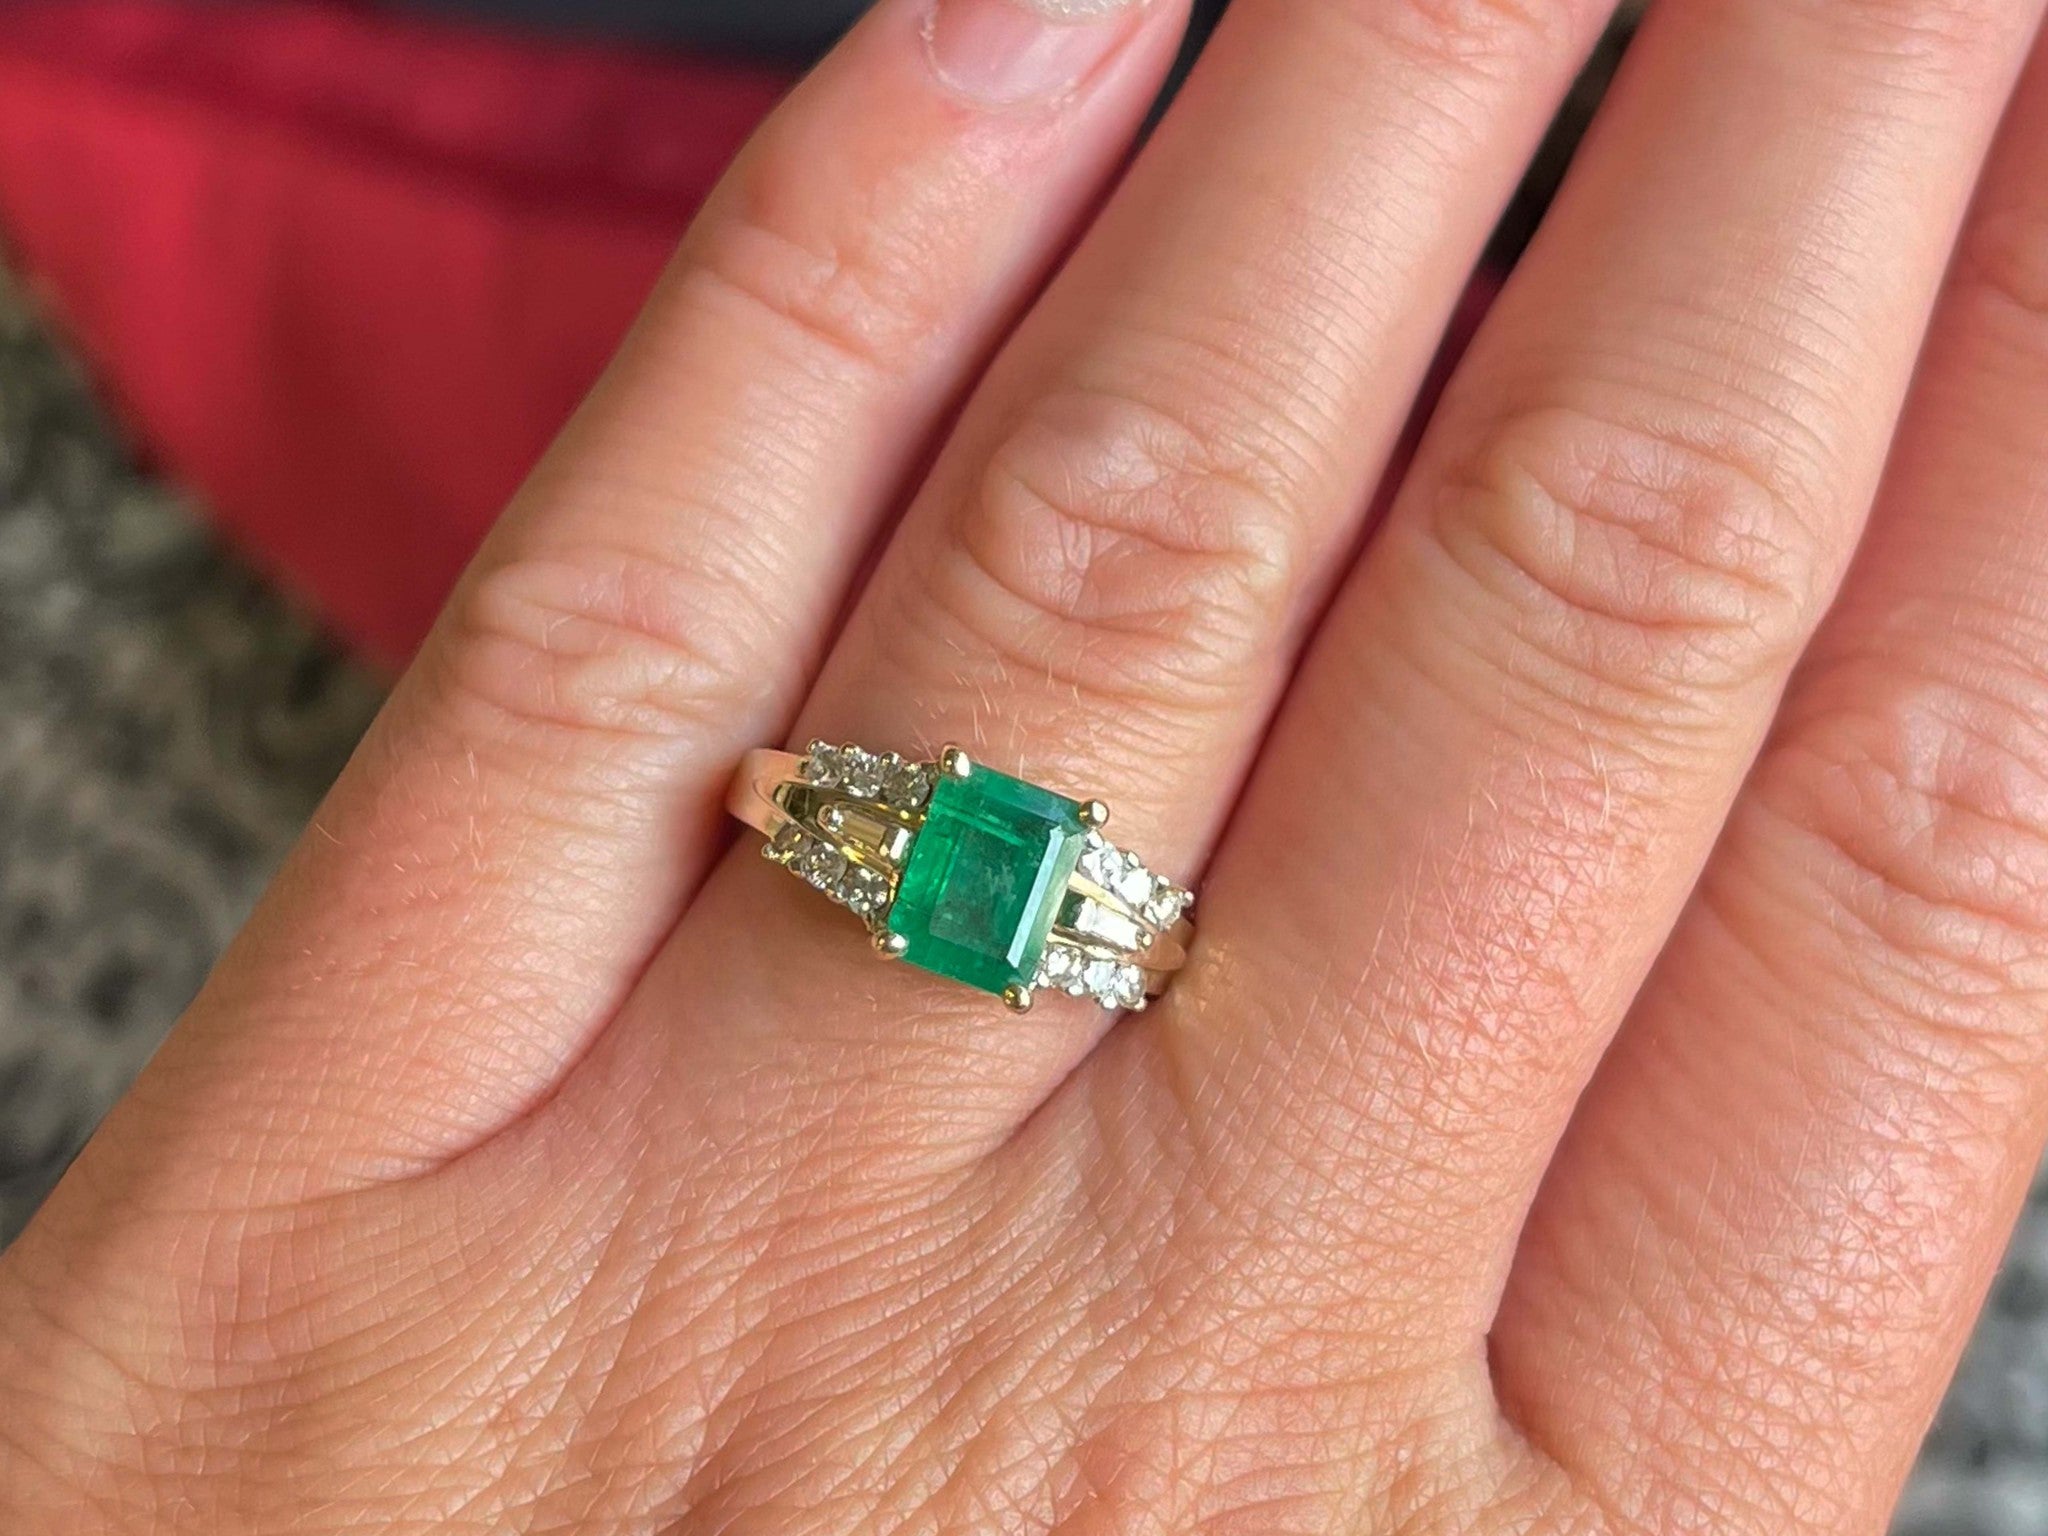 Rectangular Green Emerald and Diamond Band Ring in 14k Yellow Gold